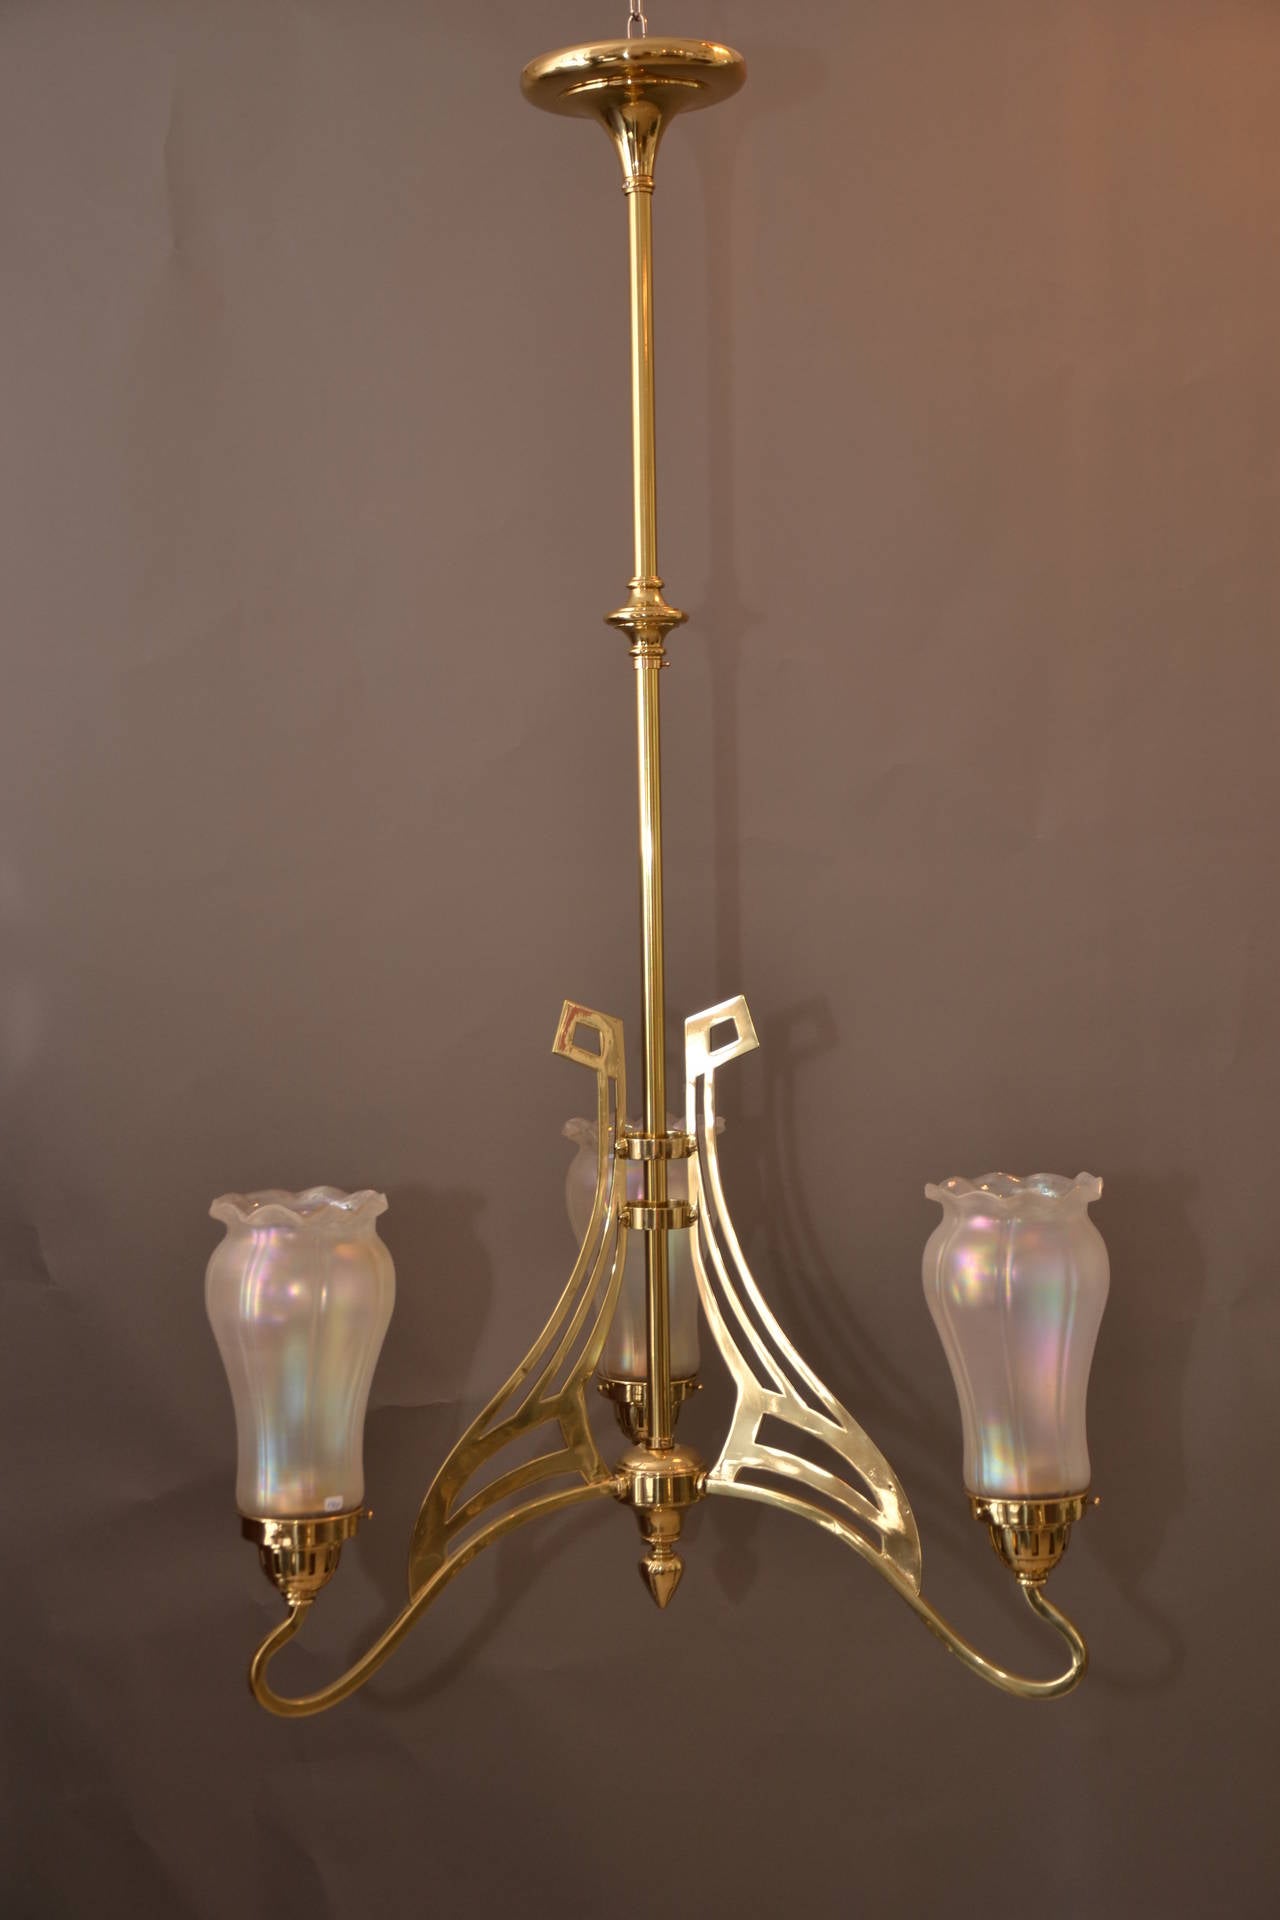 Austrian Art Nouveau three-Light Ceiling Lamp with original glass Shade